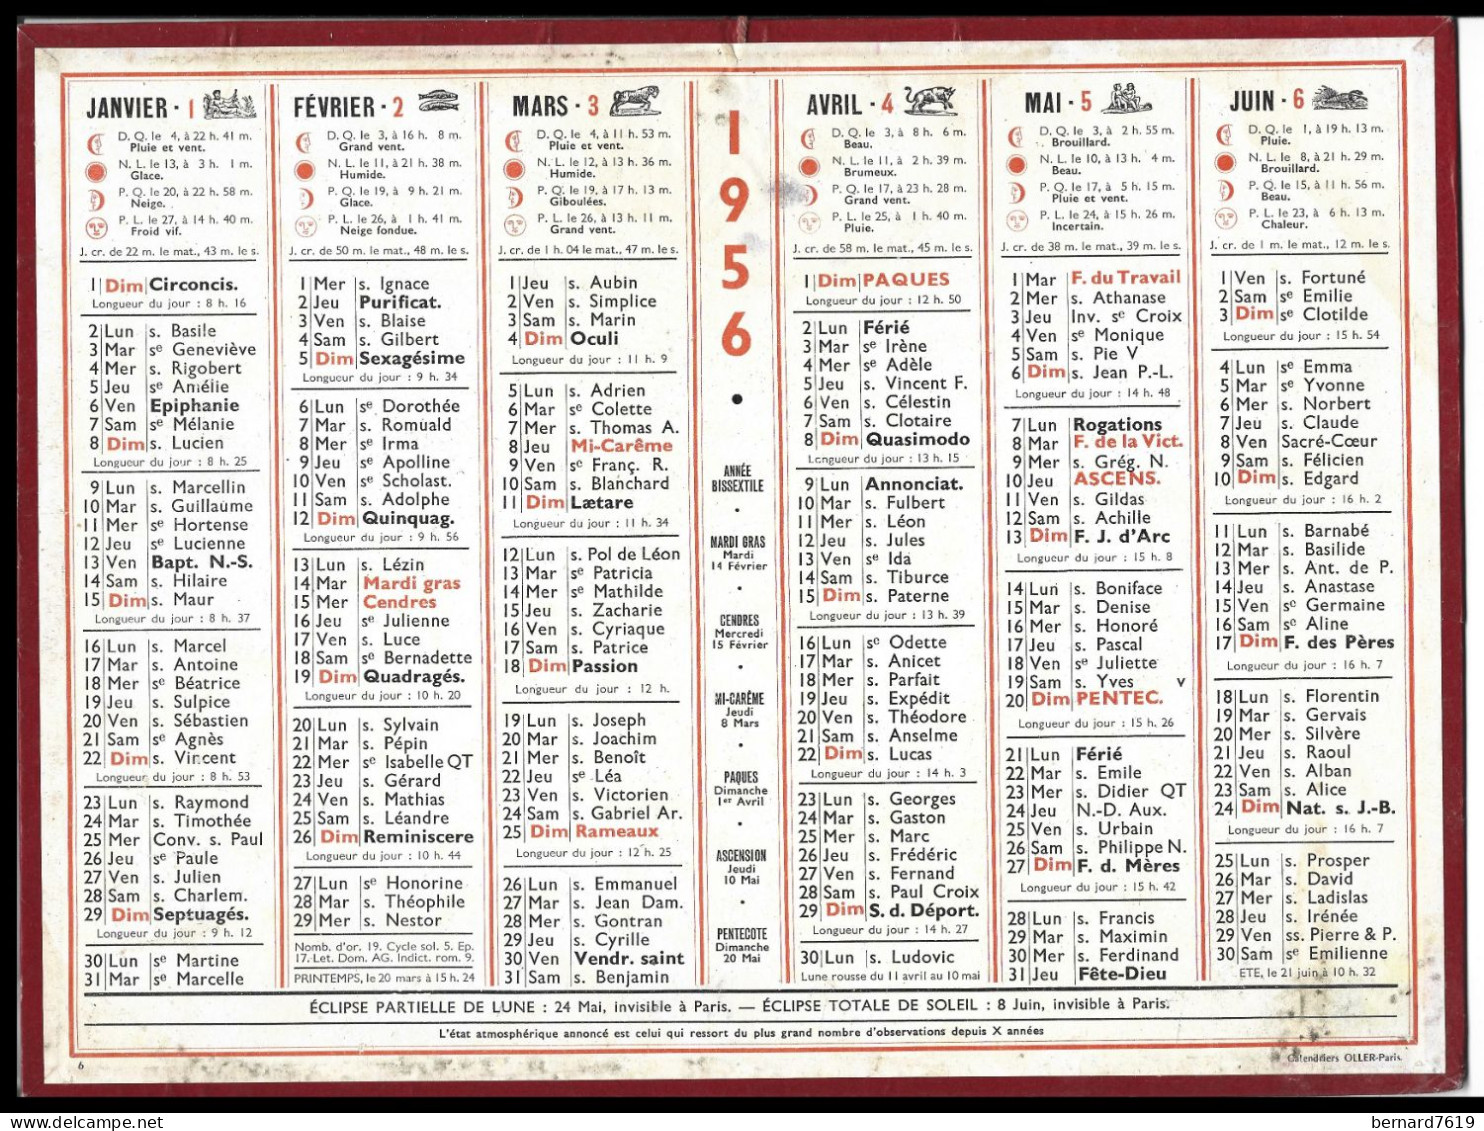 Almanach  Calendrier  P.T.T  -  La Poste -  1956 - - Groot Formaat: 1941-60